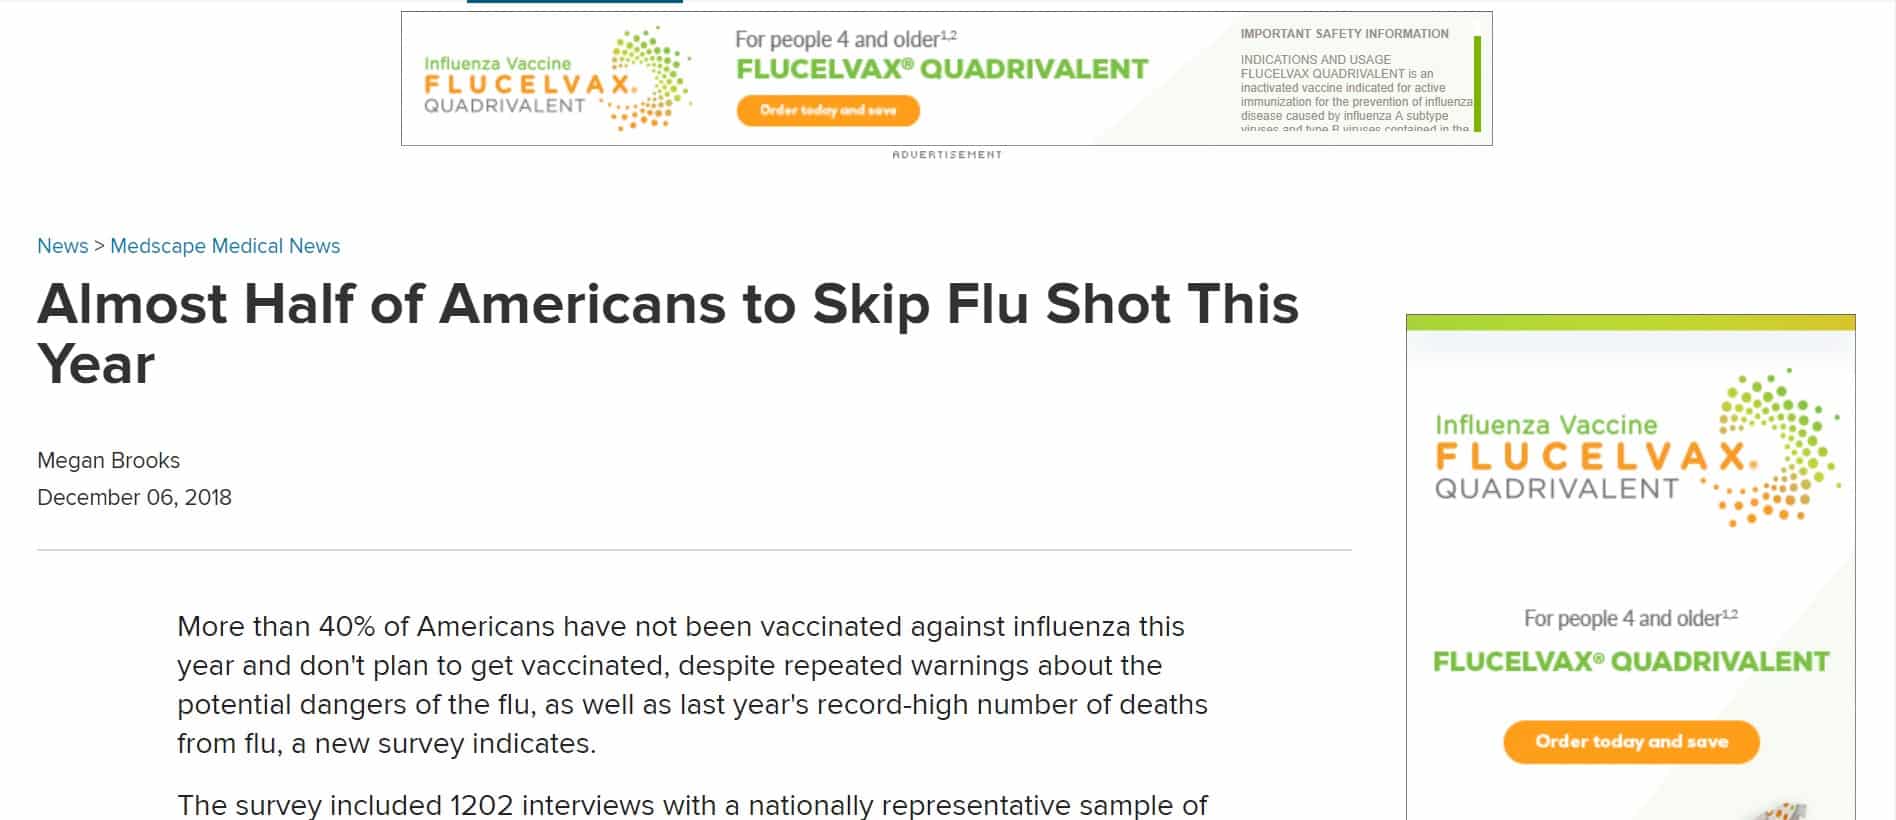 Medscape delivers flu shot propaganda while earning advertising revenue from vaccine manufacturers. (Screenshot taken December 8, 2018)